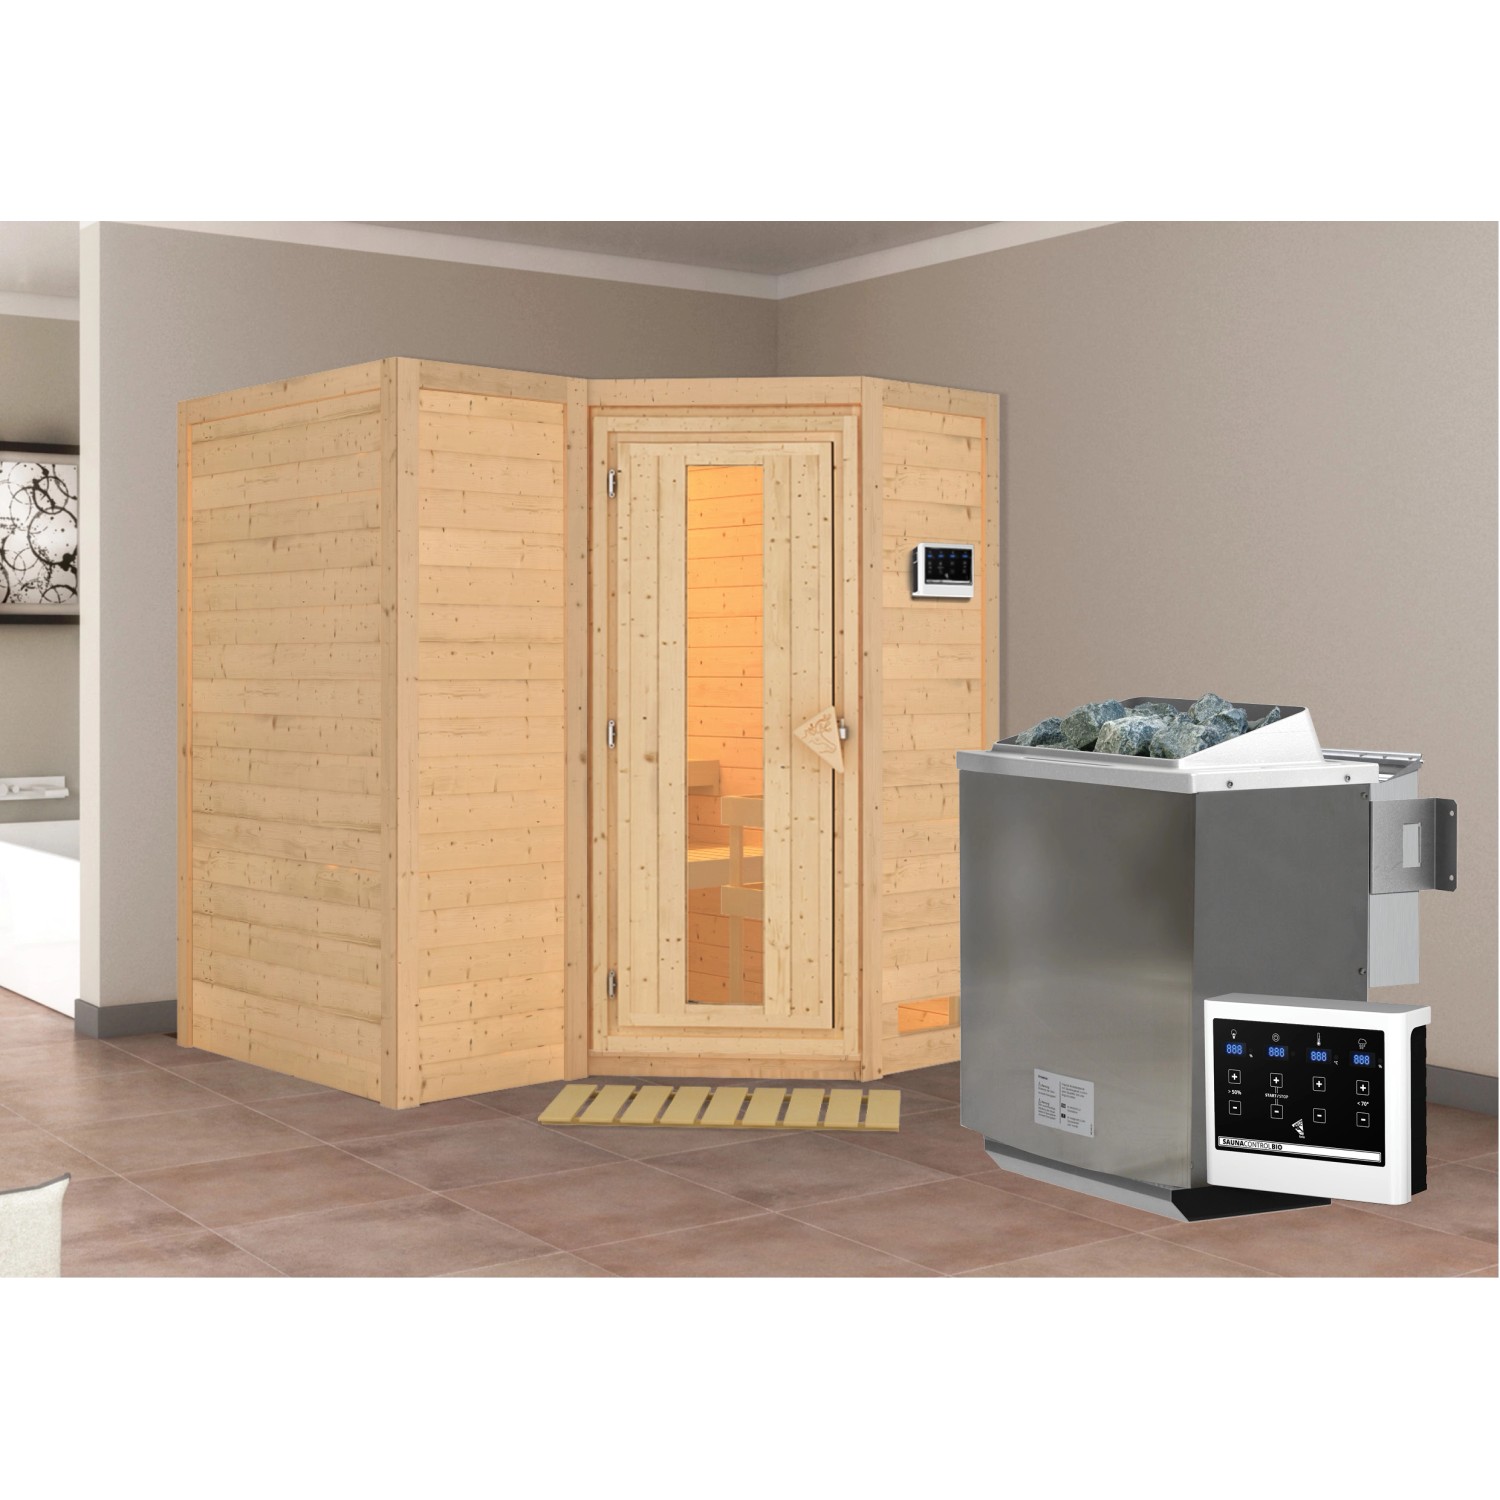 Woodfeeling Sauna Steena 1 inkl. Bio-Ofen 9 kW mit ext. Steuerung, Energies günstig online kaufen